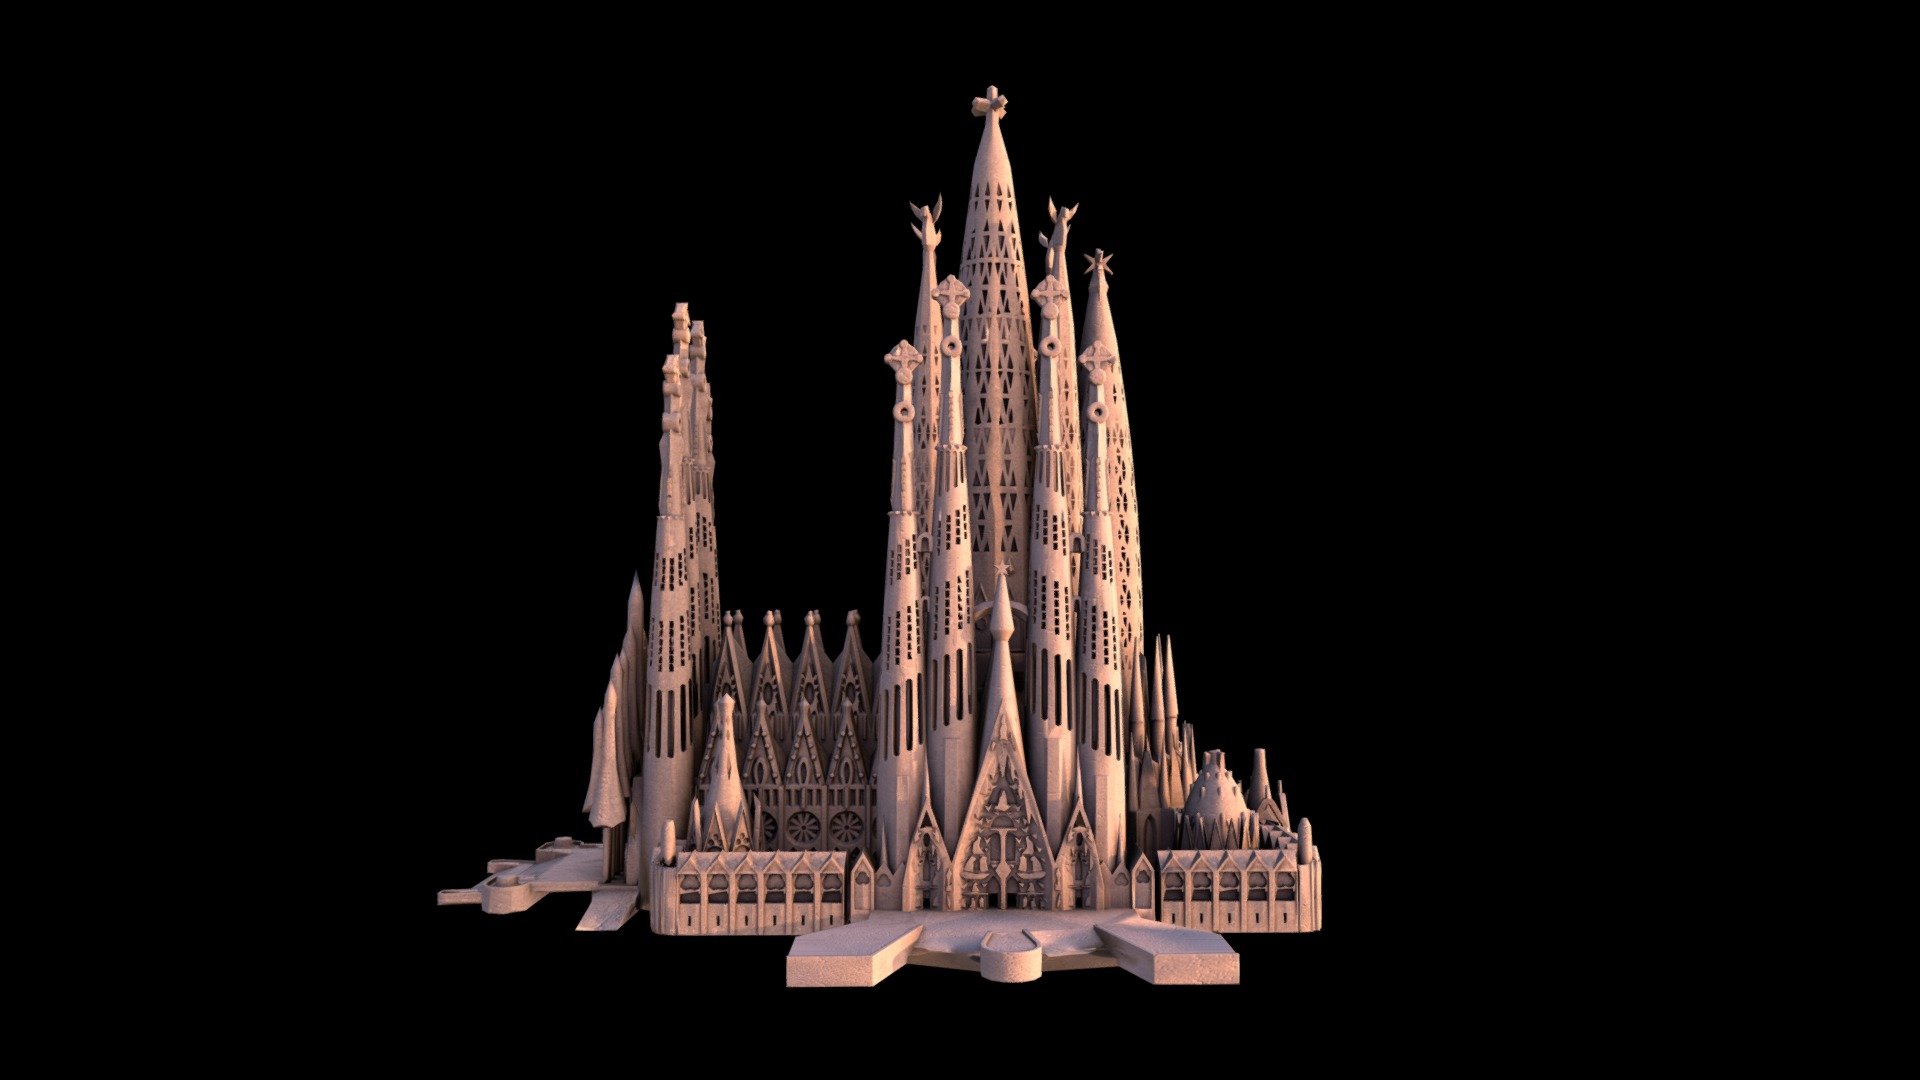 Sagrada Familia (Spatial.io) 

Game ready model Made for Spatial.io 

Metaverse Location: Galaxion

My telegram contact: @damir_cgi

My artstation: https://www.artstation.com/damir_cgi

Spatial Location link: https://www.spatial.io/s/Test-6579b12236af00149056b742

 - Sagrada Familia (Spatial.io) - 3D model by damir CGI (@damir_cgi) 3d model